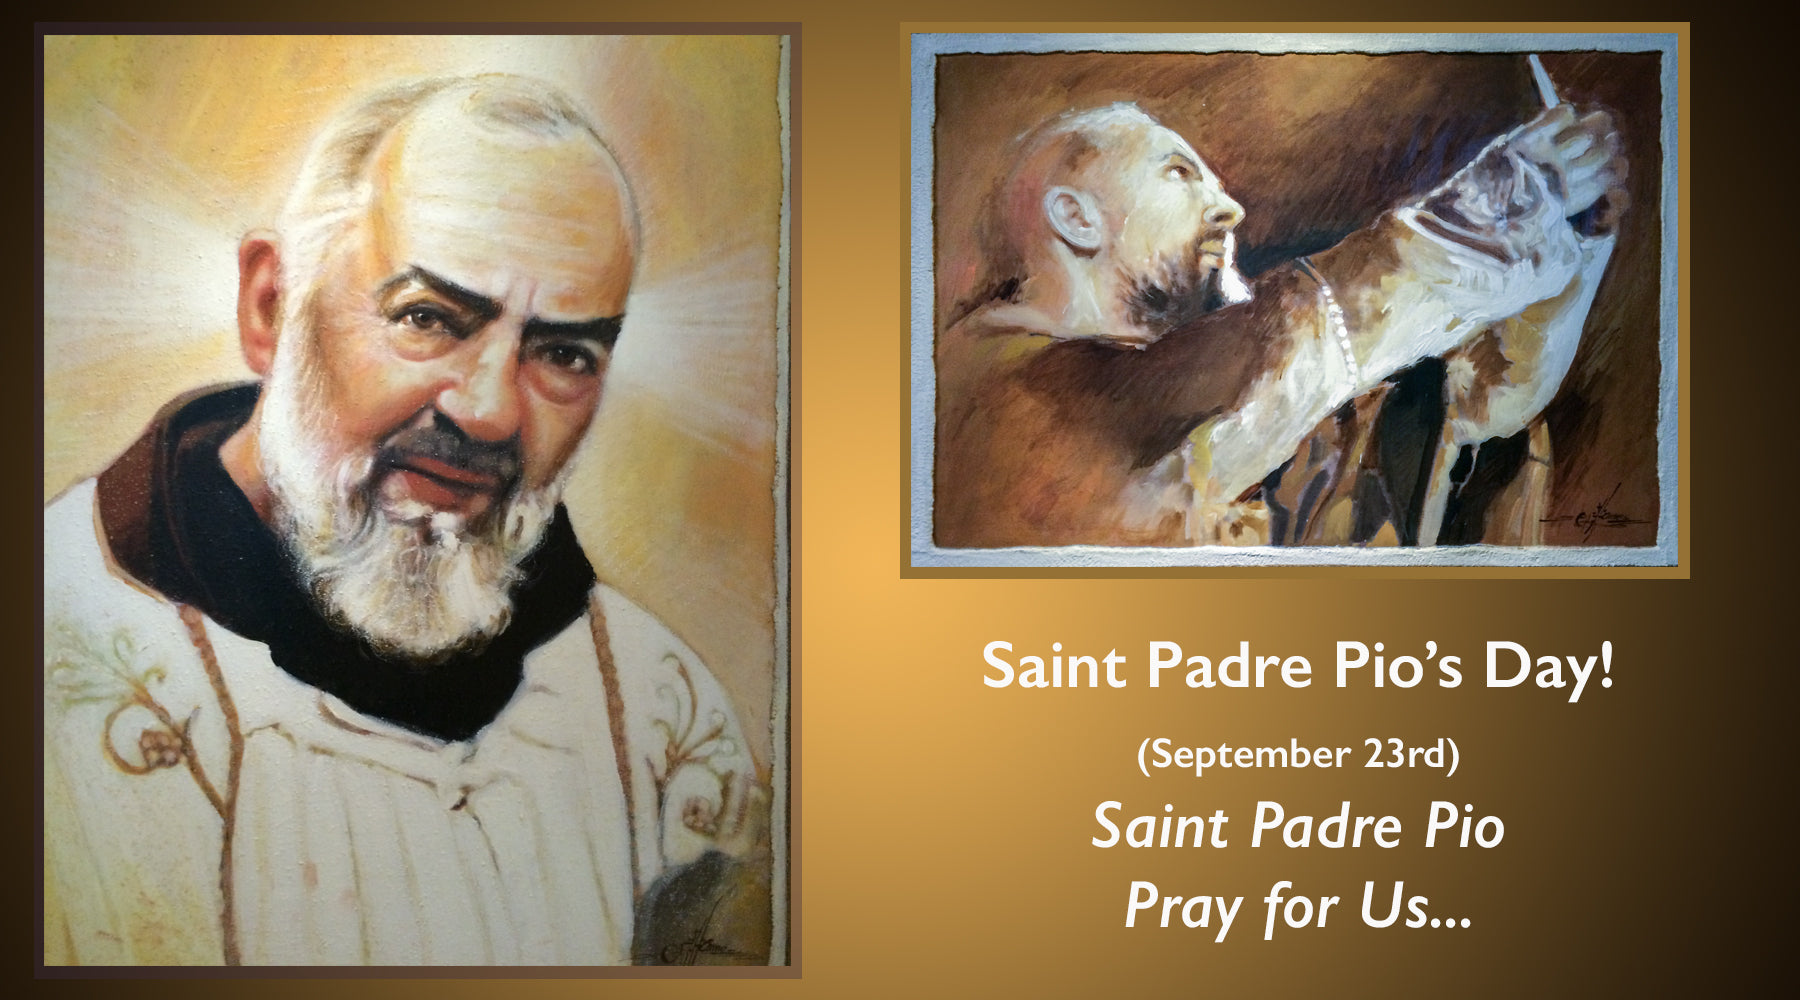 Saint Padre Pio of Pietrelcina's Day, Sept. 23